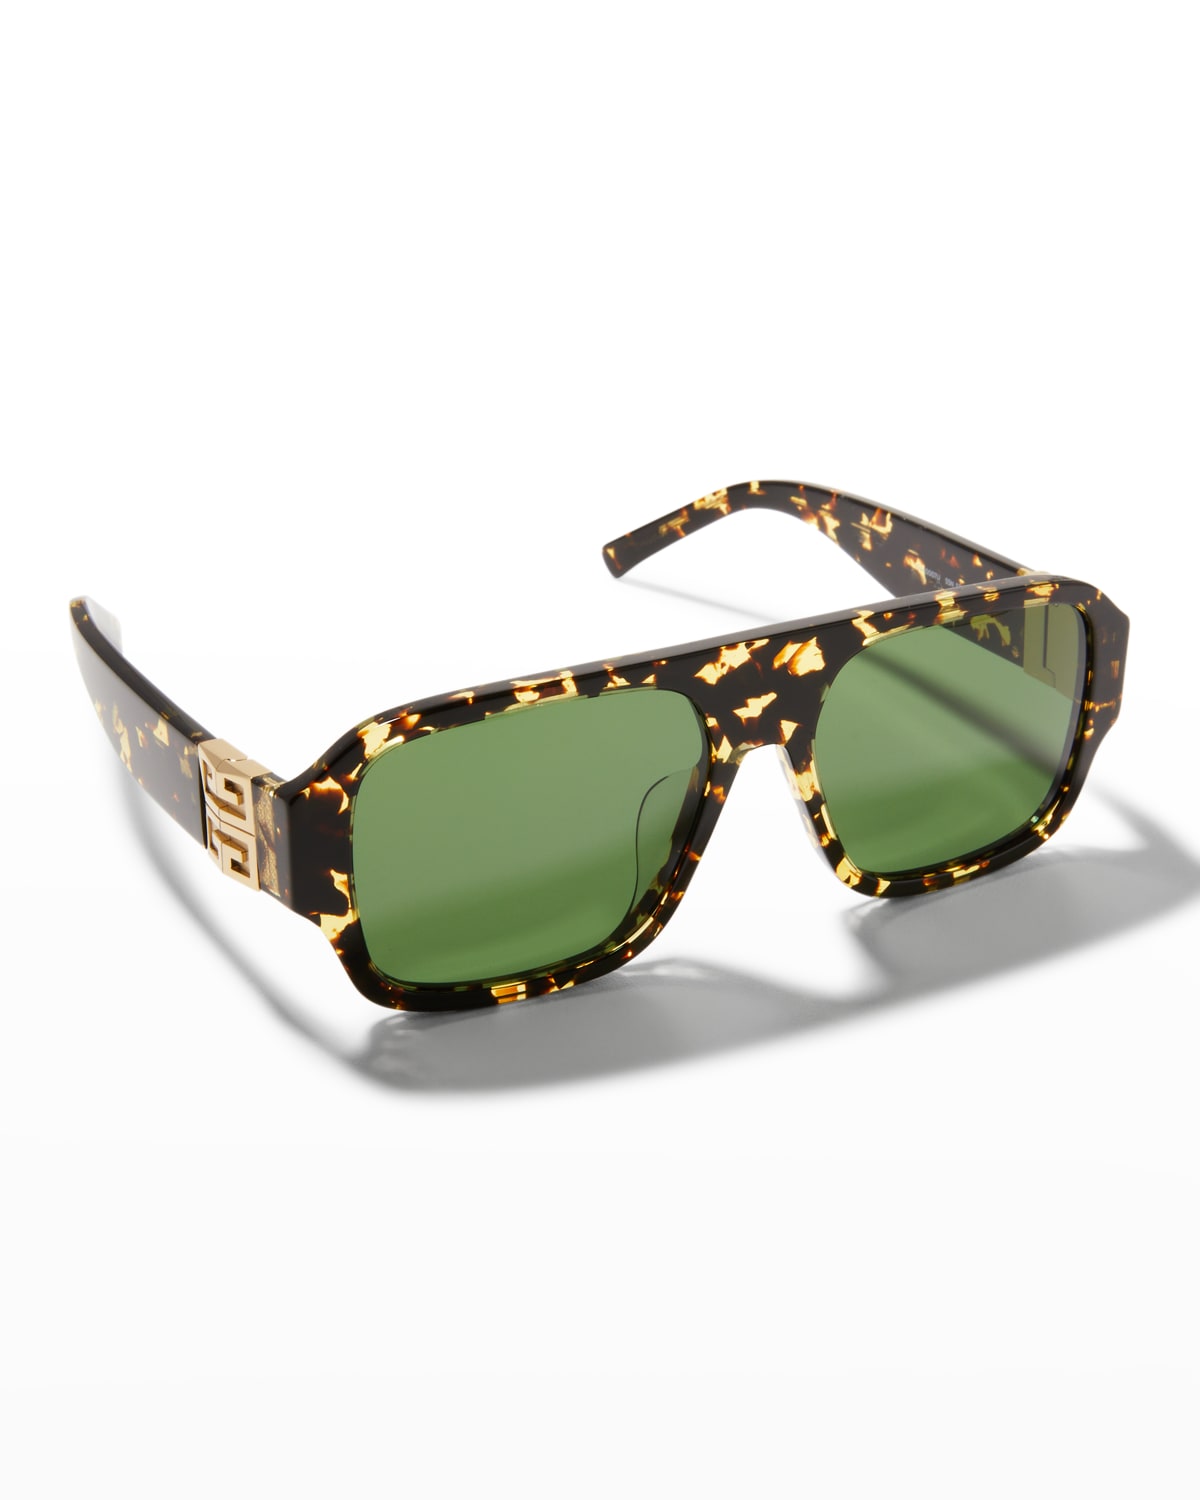 Givenchy Sunglasses | Neiman Marcus